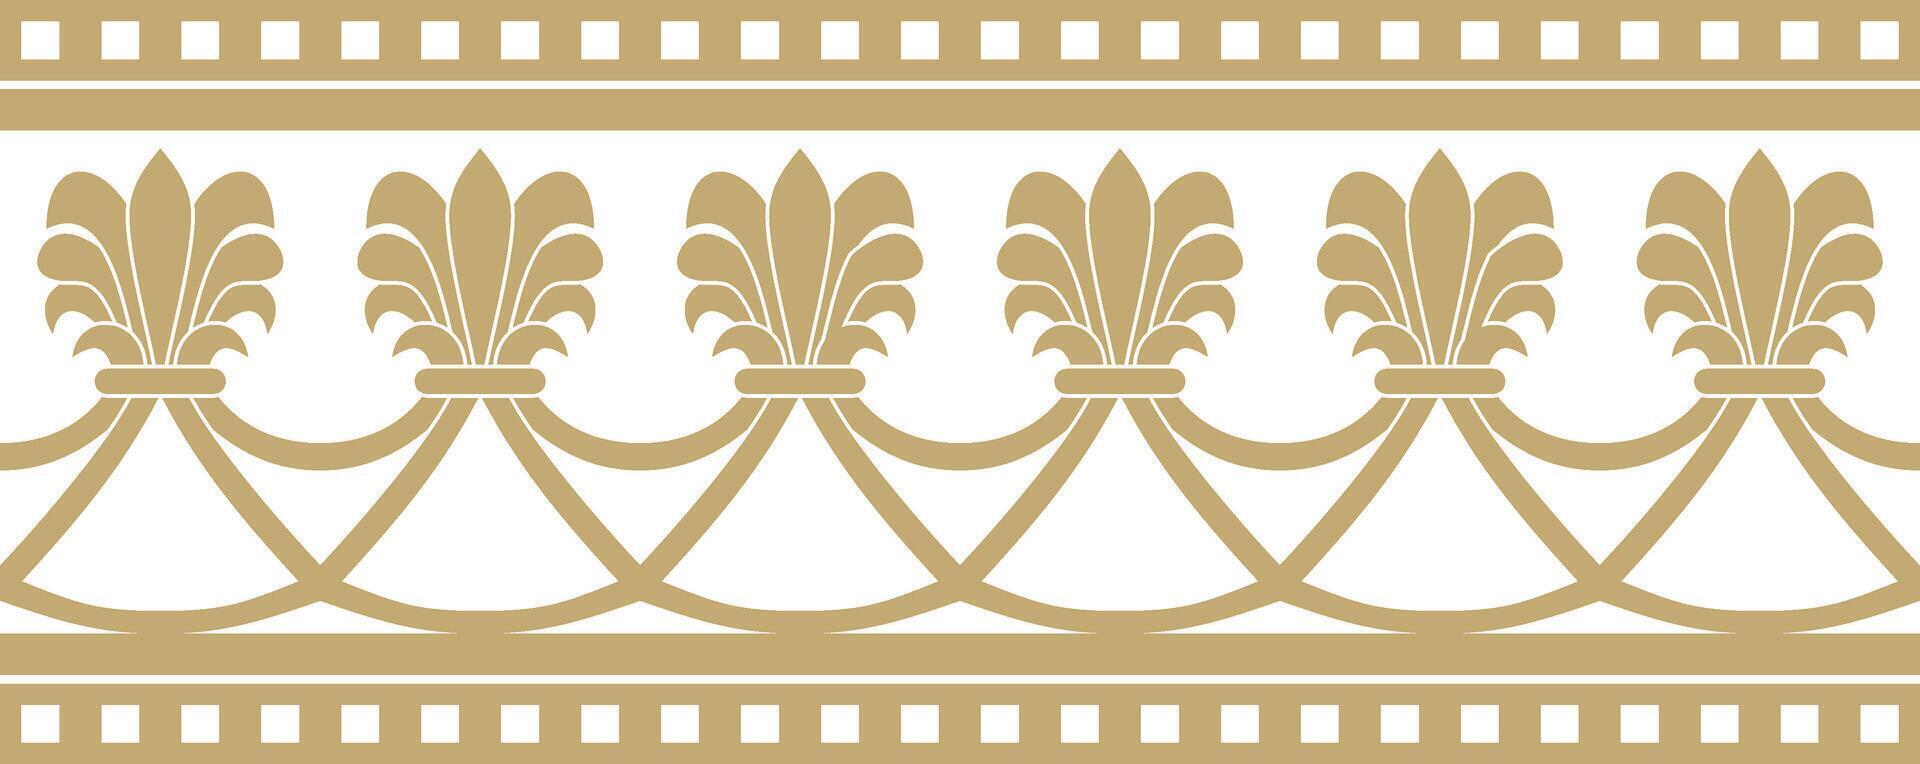 vector interminable dorado nacional persa ornamento. sin costura marco, frontera étnico modelo de iraní civilización